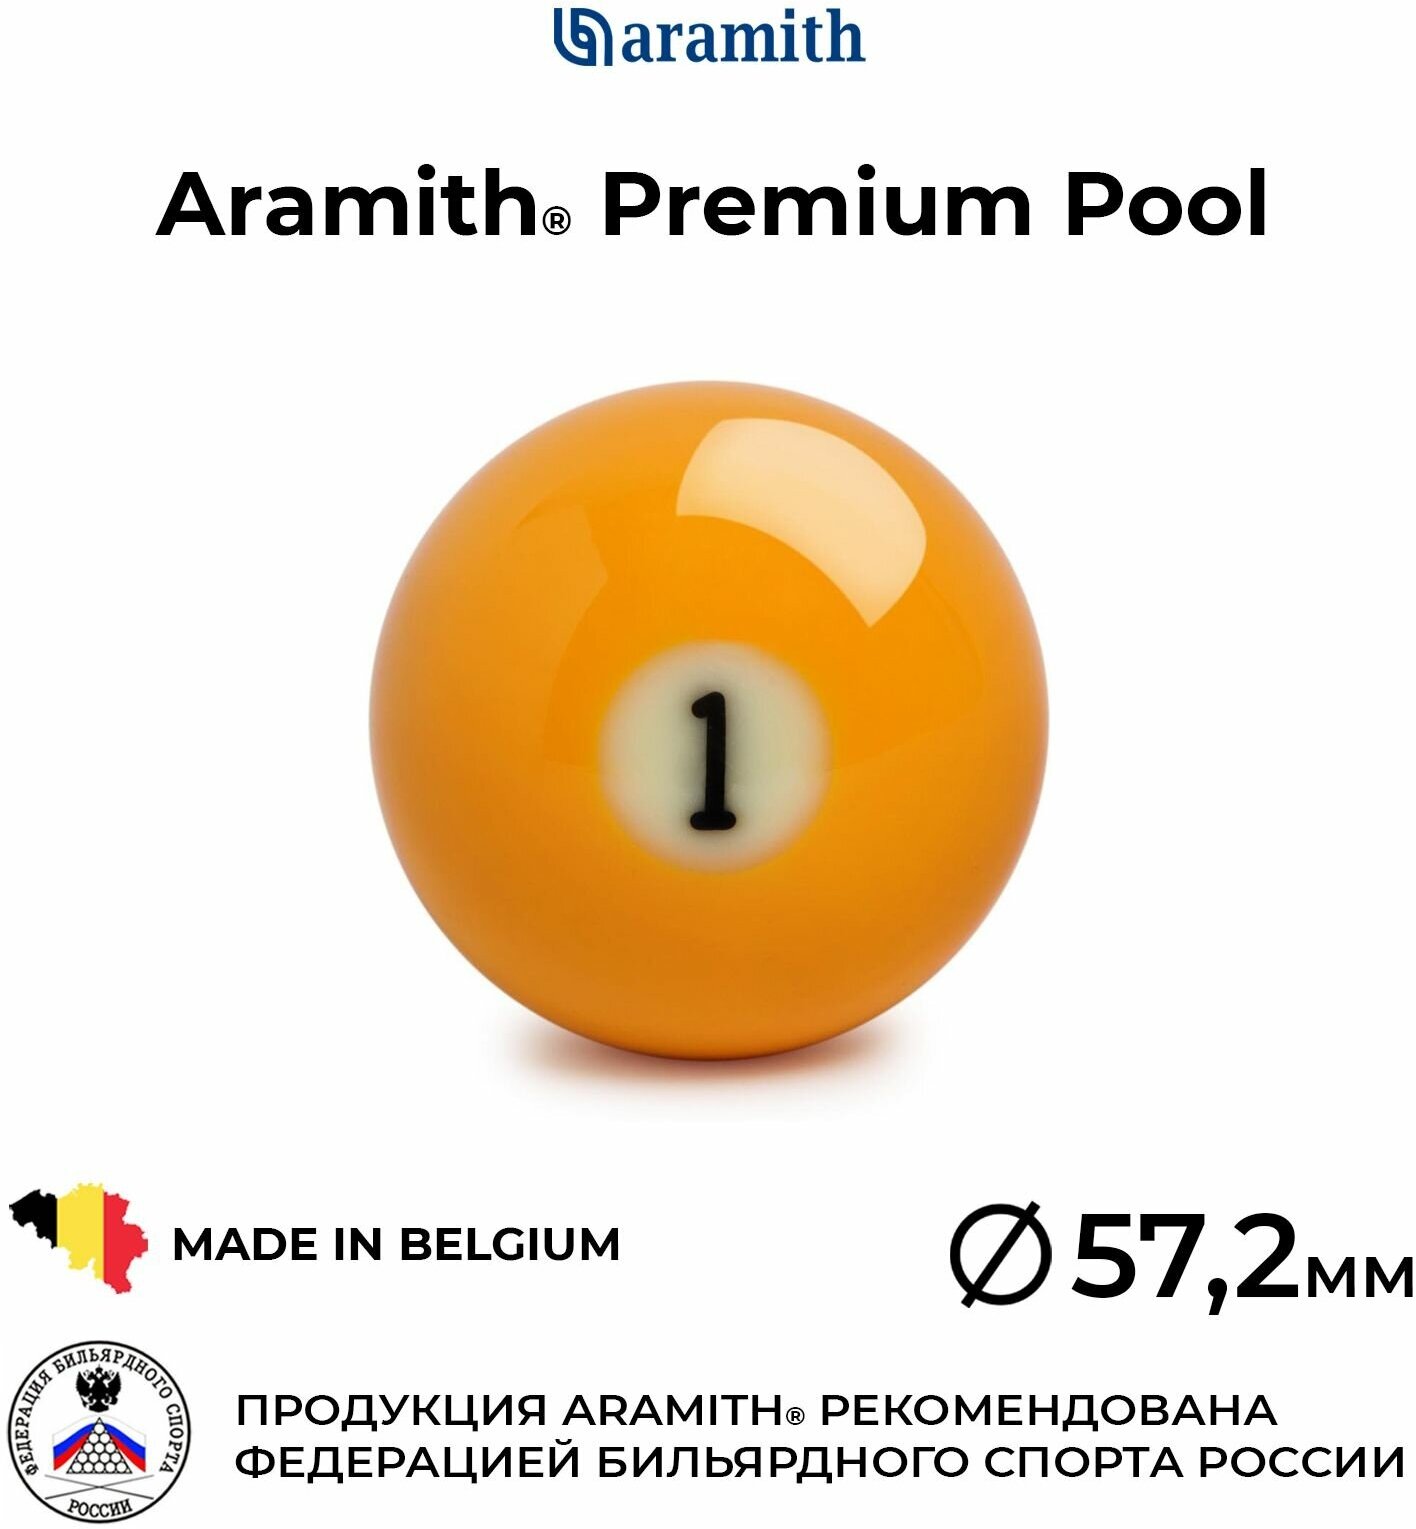 Бильярдный шар 57,2 мм Арамит Премиум Пул №1 / Aramith Premium Pool №1 57,2 мм желтый 1 шт.